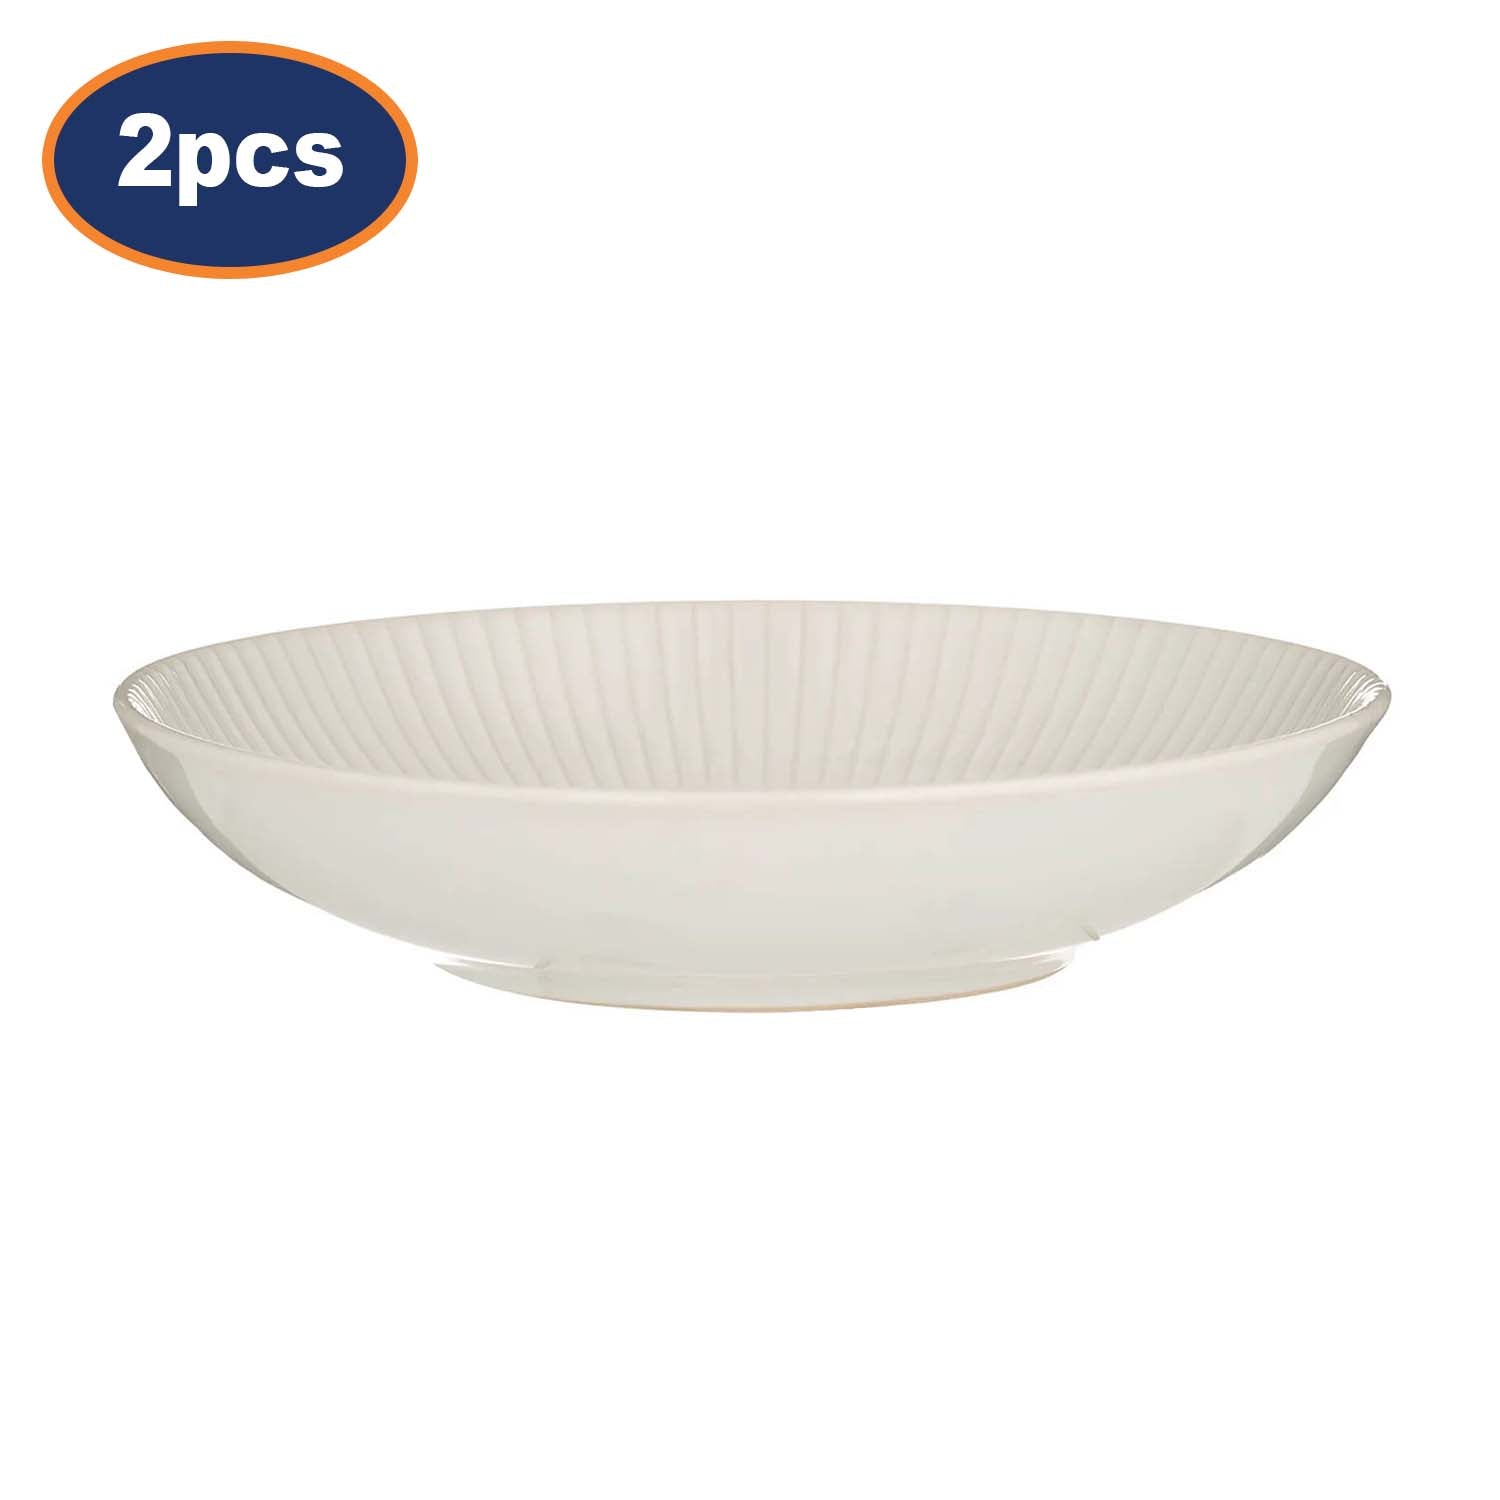 2Pcs 22cm White Round Stoneware Serving Bowls